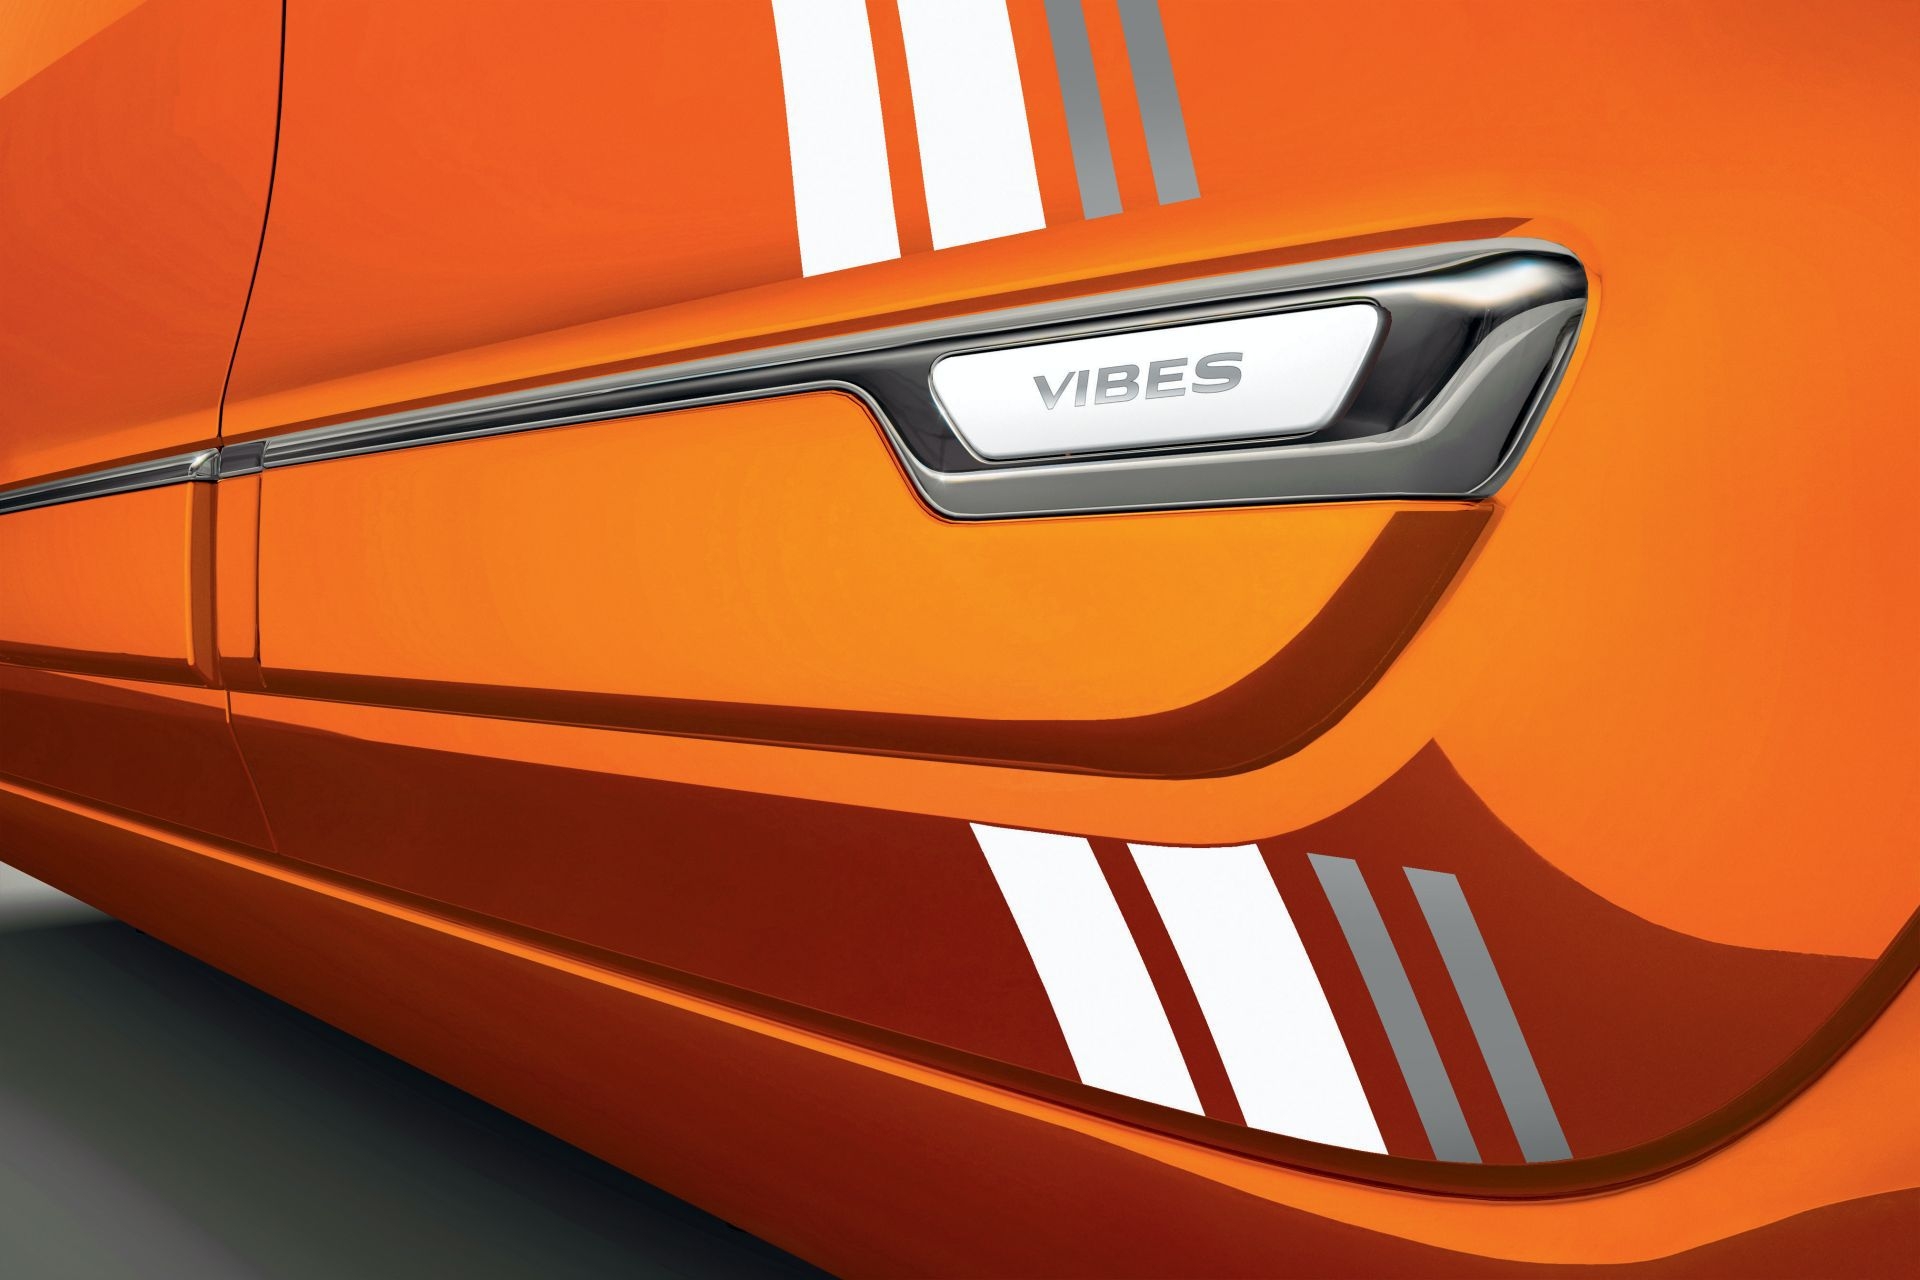 Renault เปิดตัว Twingo Z.E รุ่นพิเศษ Vibes ดีไซน์ใหม่สีสันฉูดฉาด